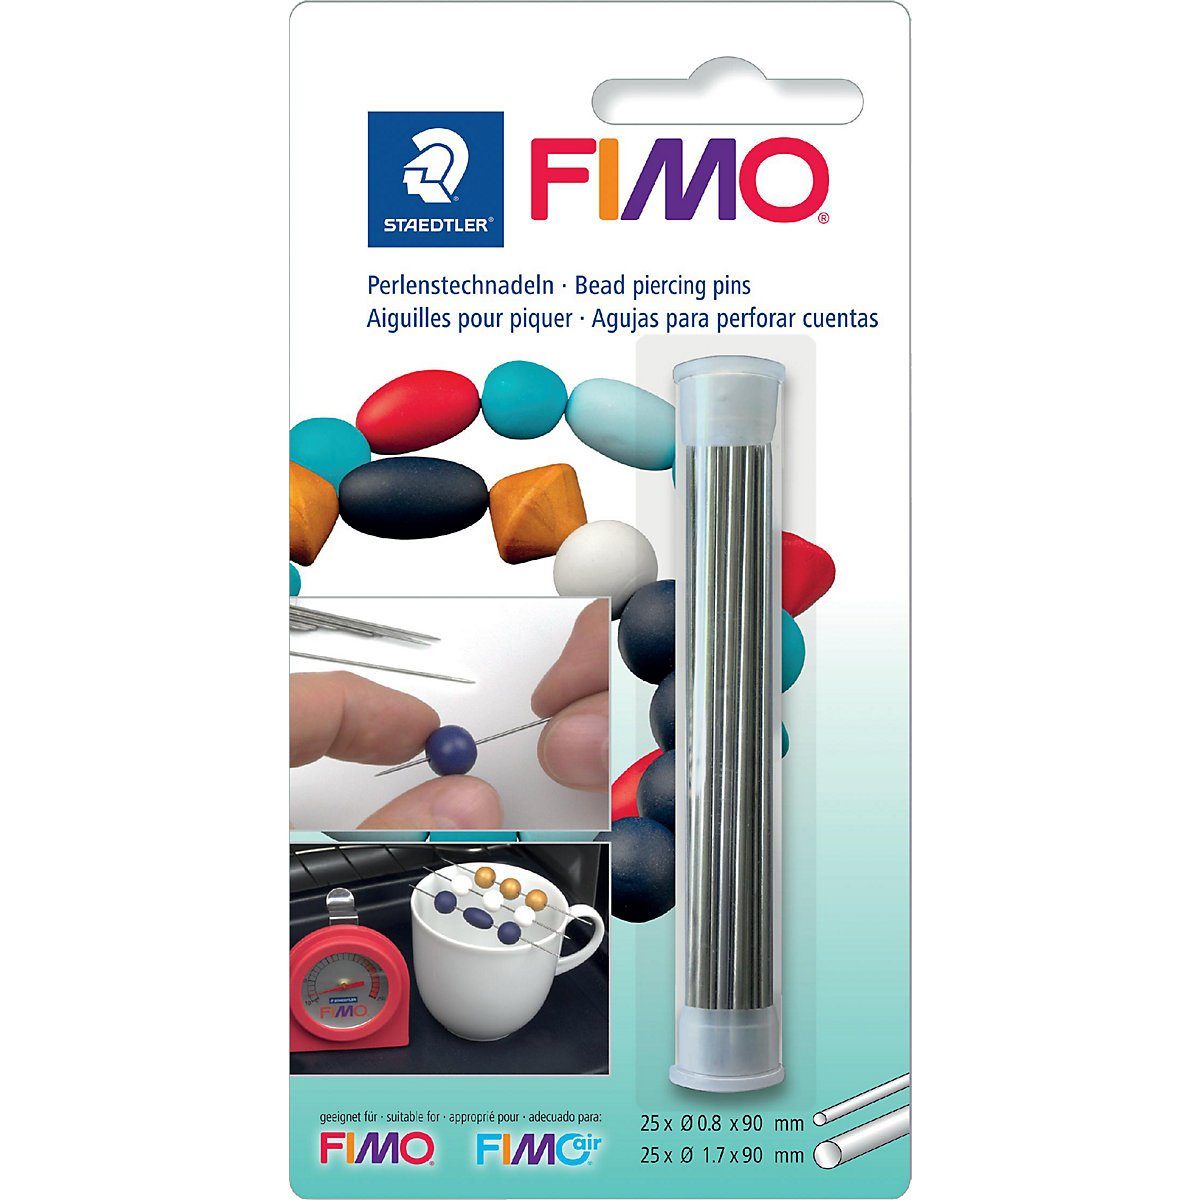 FIMO Knete FIMO Perlenstechnadeln, 50 Stück in 2 Stärken